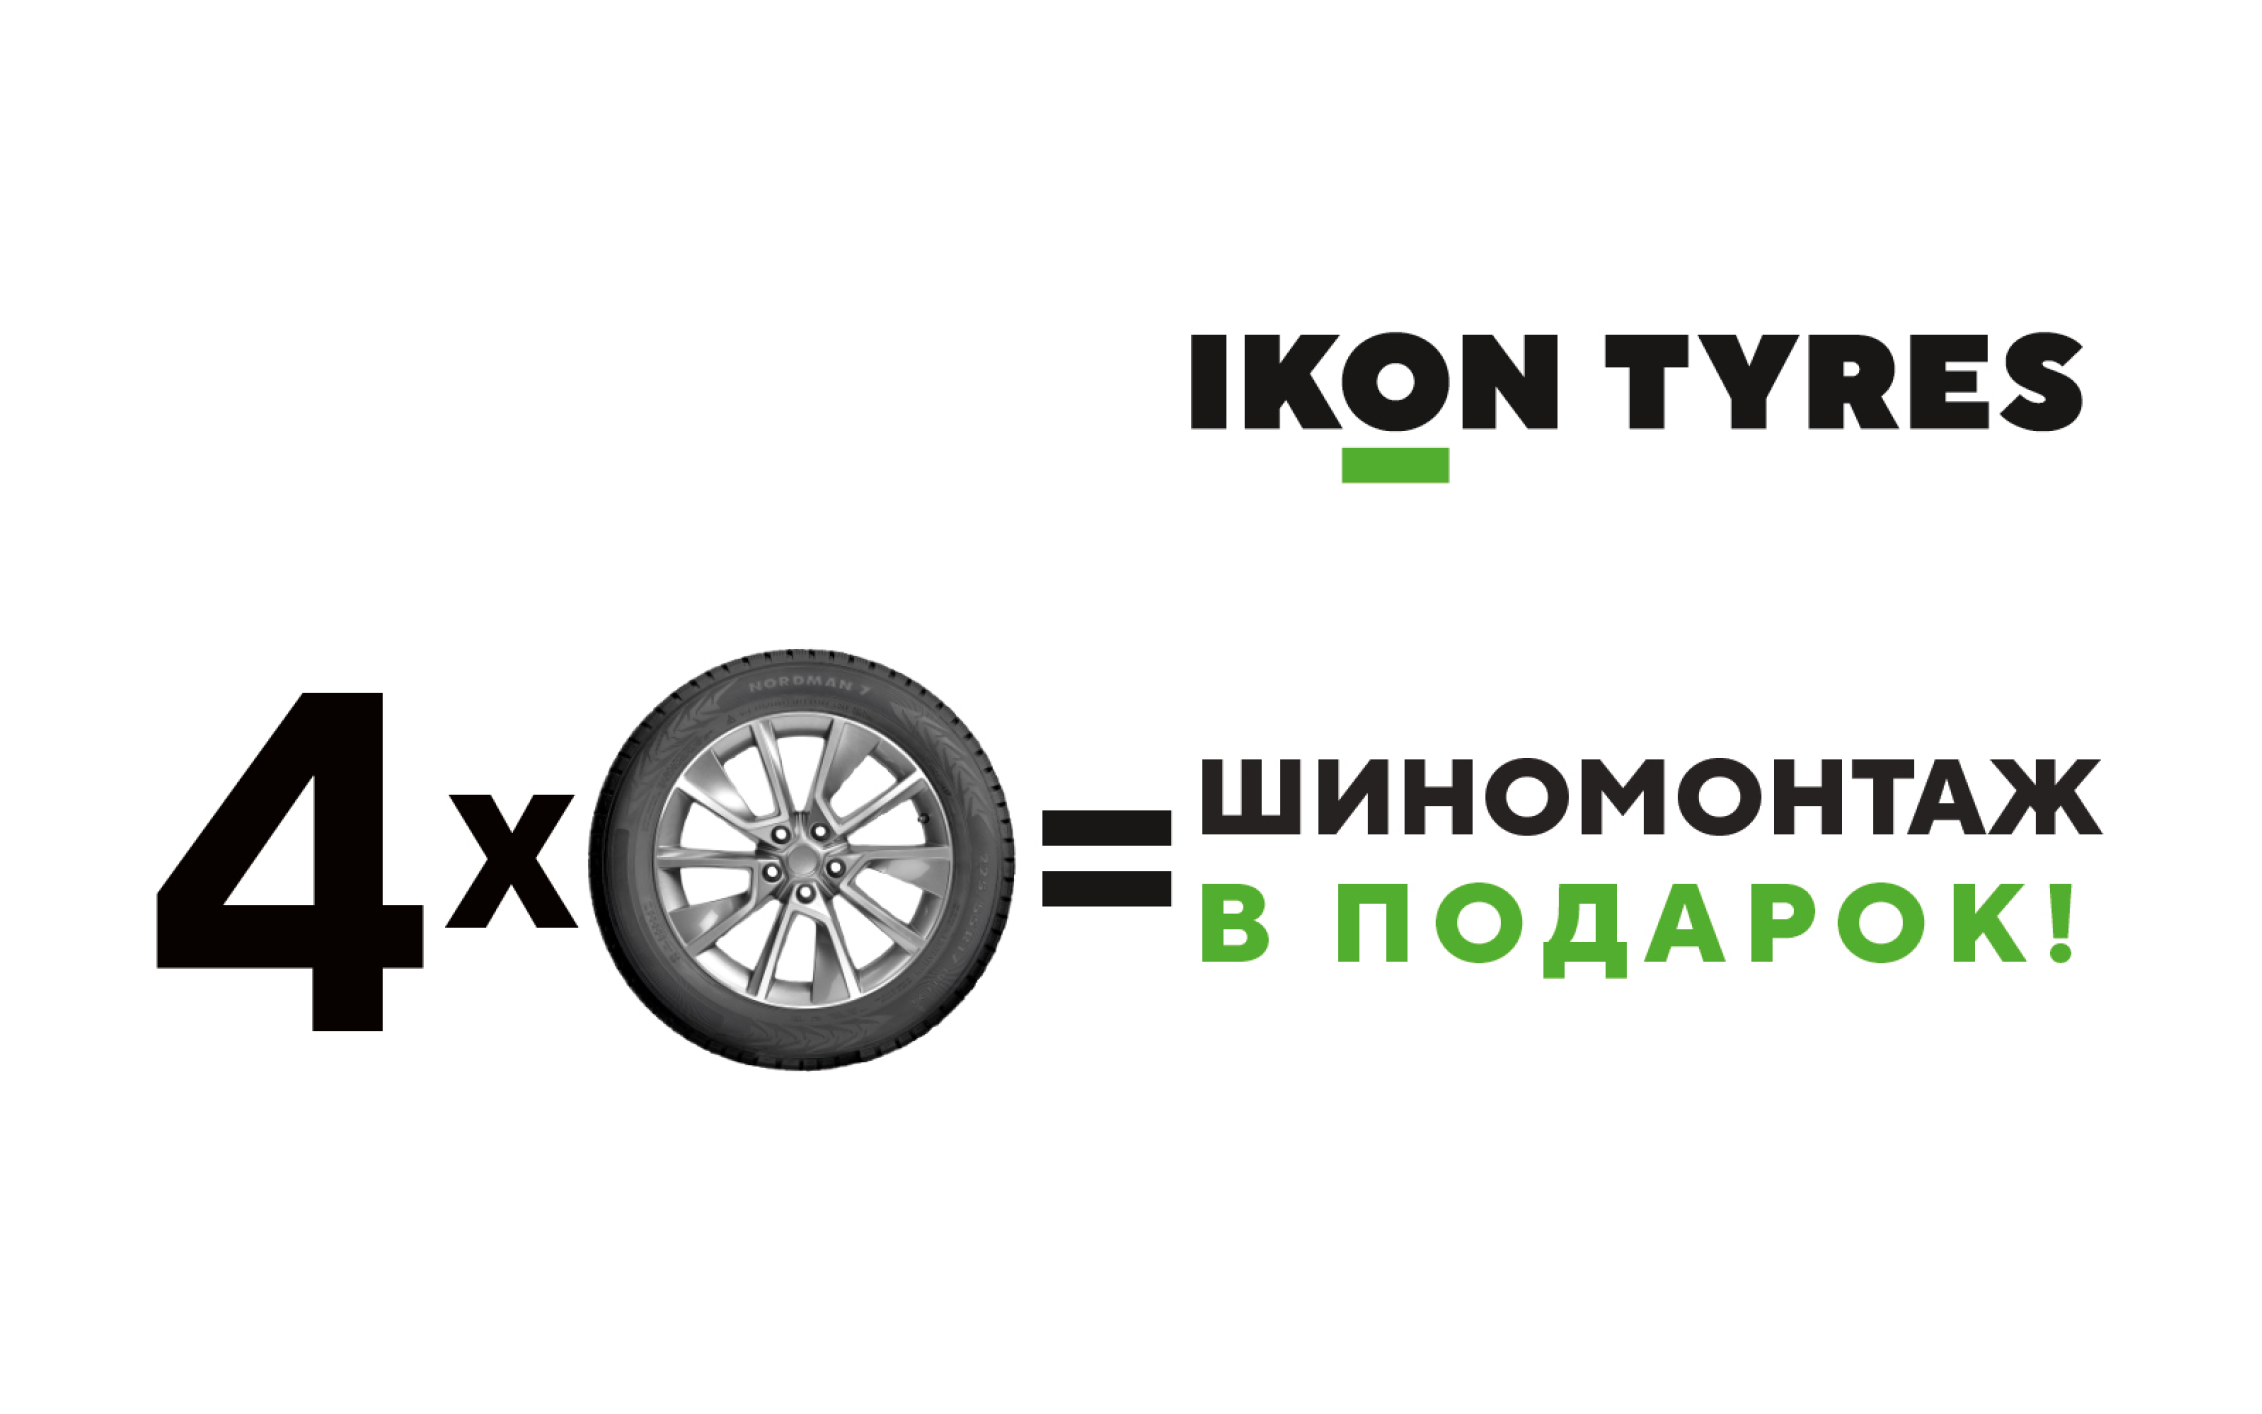 Ikon tyres sx3 отзывы летние шины. Шины ikon Tyres. Летних шин ikon Tyres. Логотип ikon Tyres Nokian. Ikon Tyres летние шины производитель.